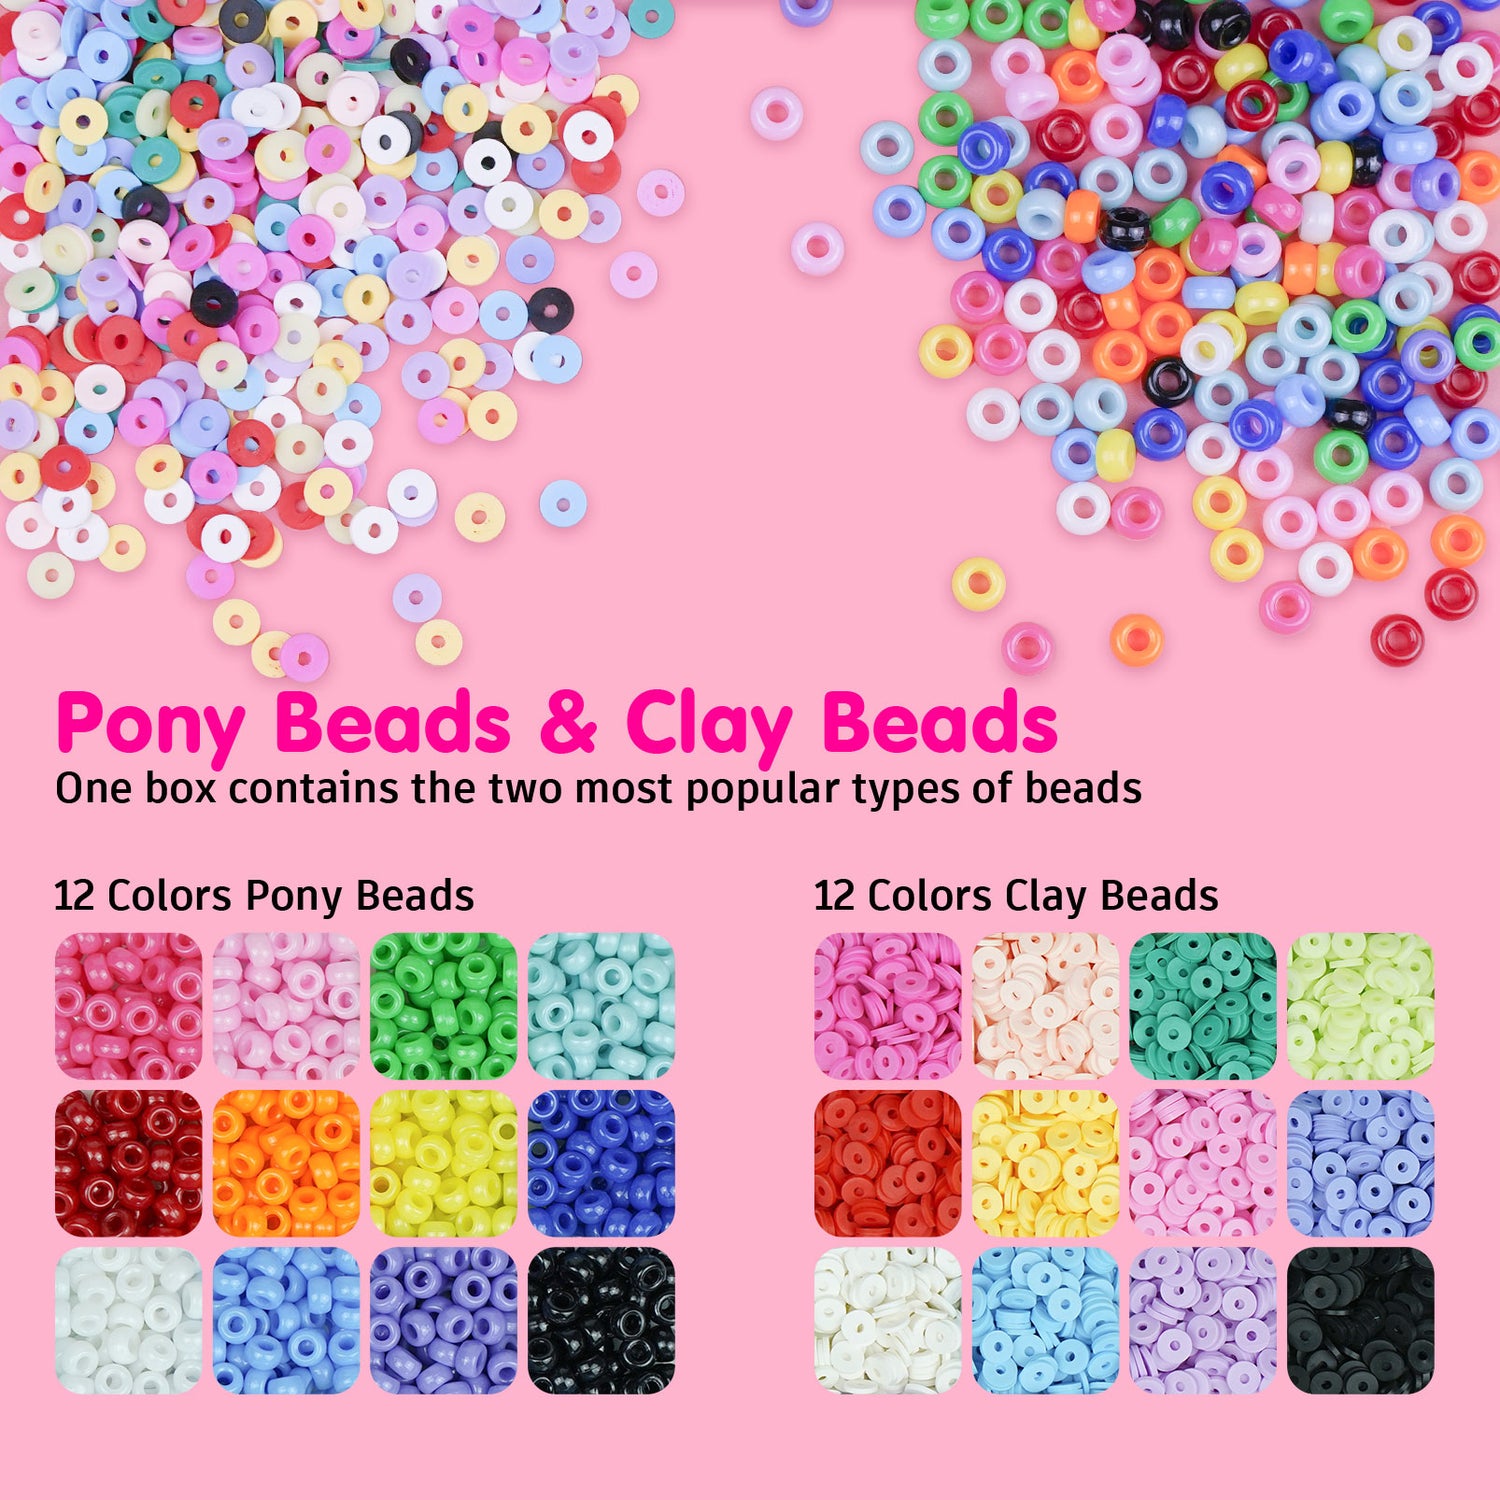 Velavior 7500 Pcs Clay Beads Bracelet Making Kit, 2 Boxes 24